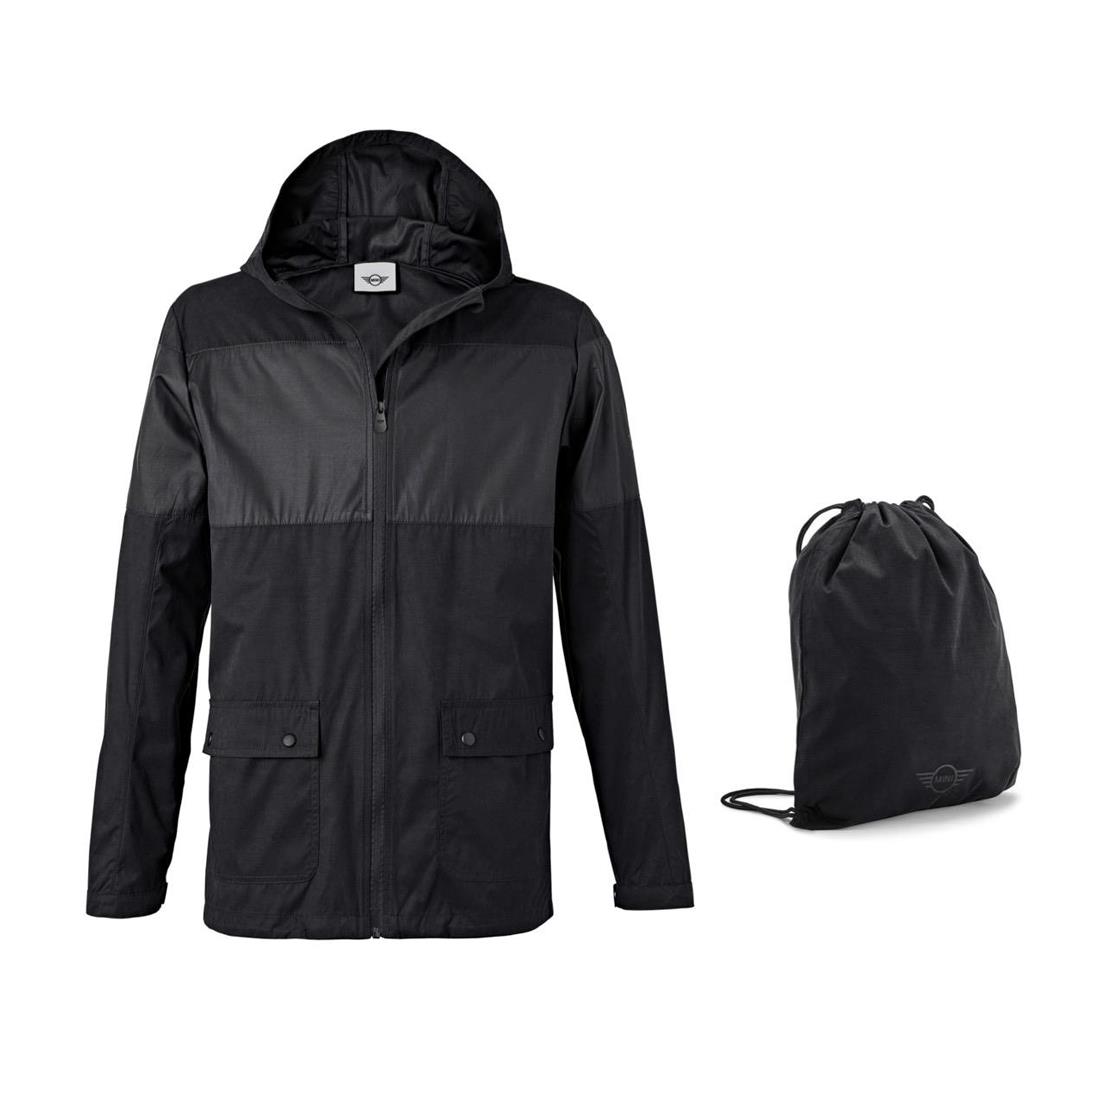 ShopMINIUSA.com: MINI Men's Jacket with Backpack Black